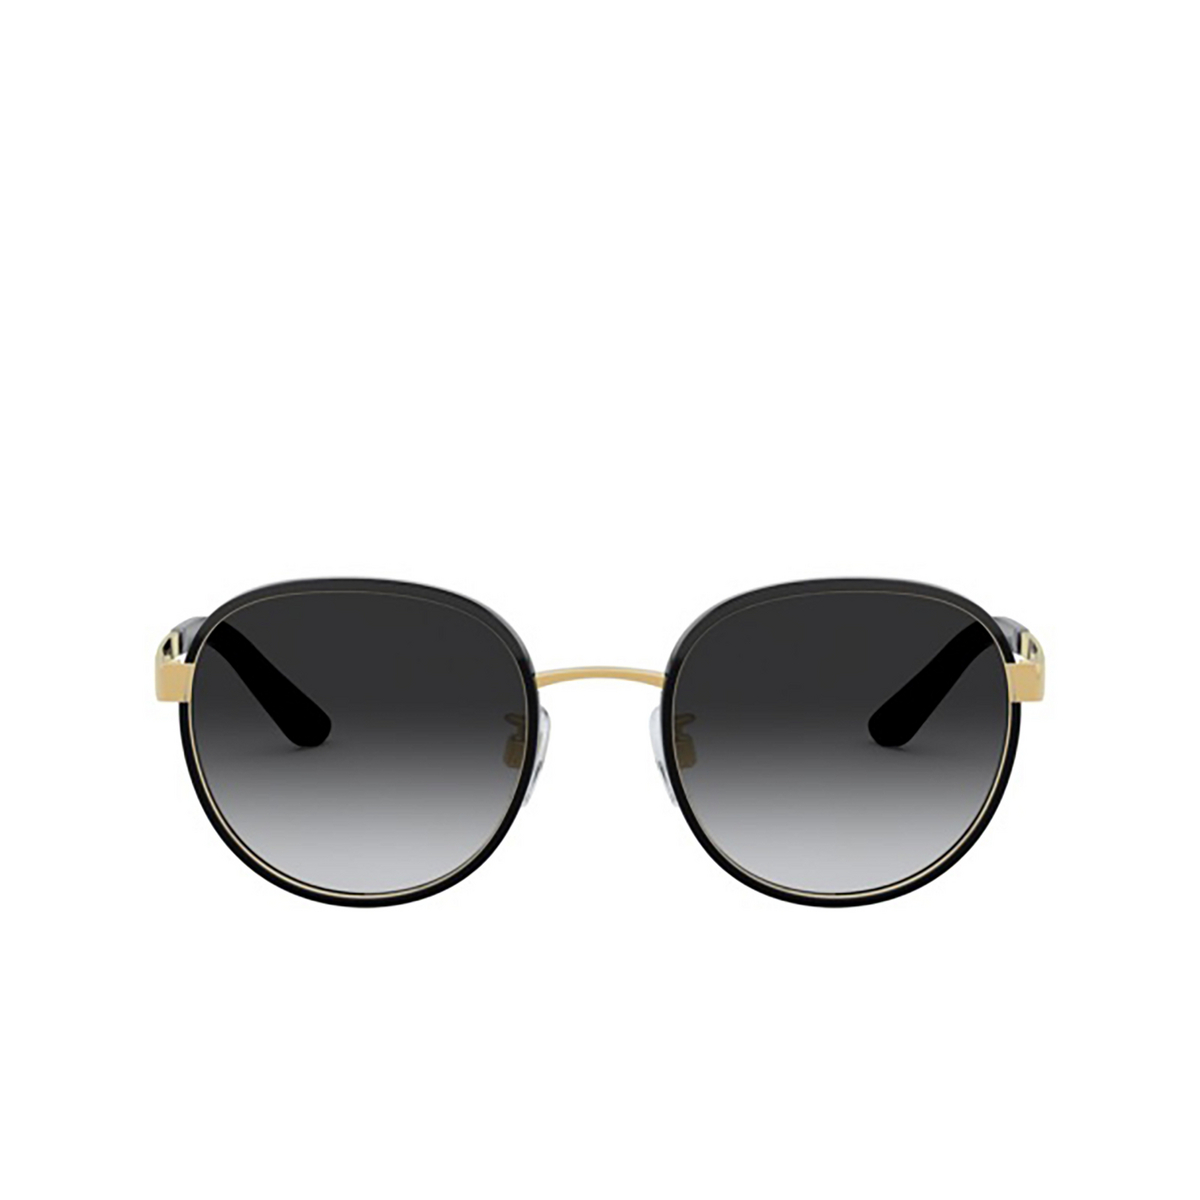 Dolce & Gabbana® Round Sunglasses: DG2227J color 02/8G Black / Gold - 1/3